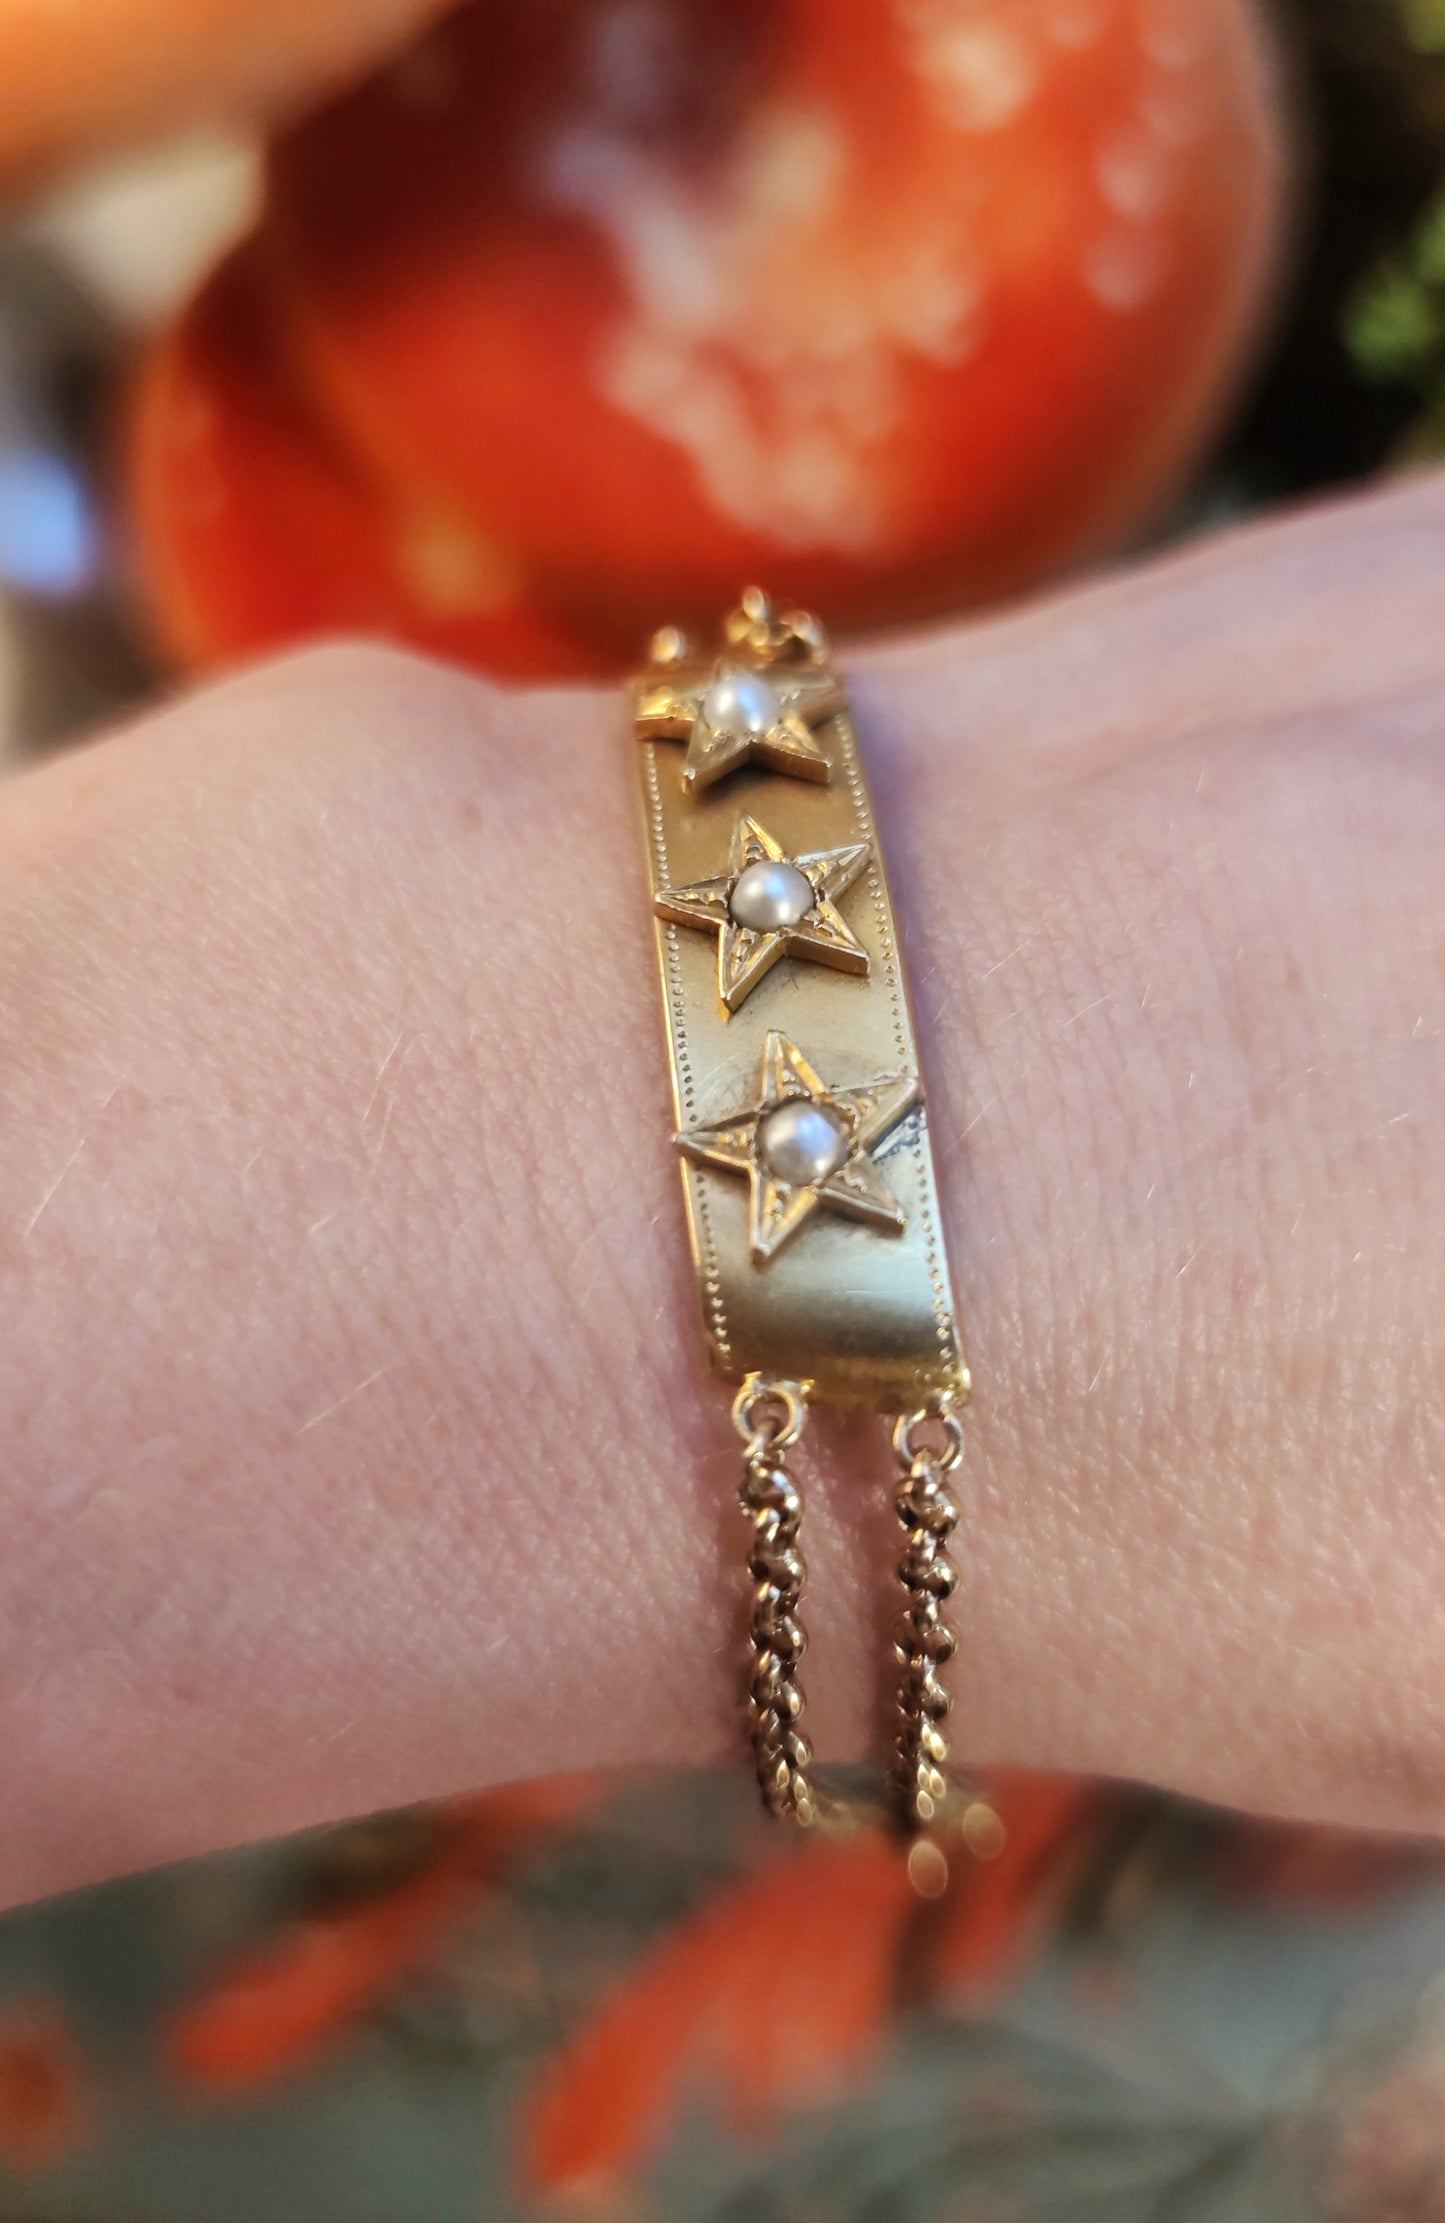 Orions belt bracelet with three stars